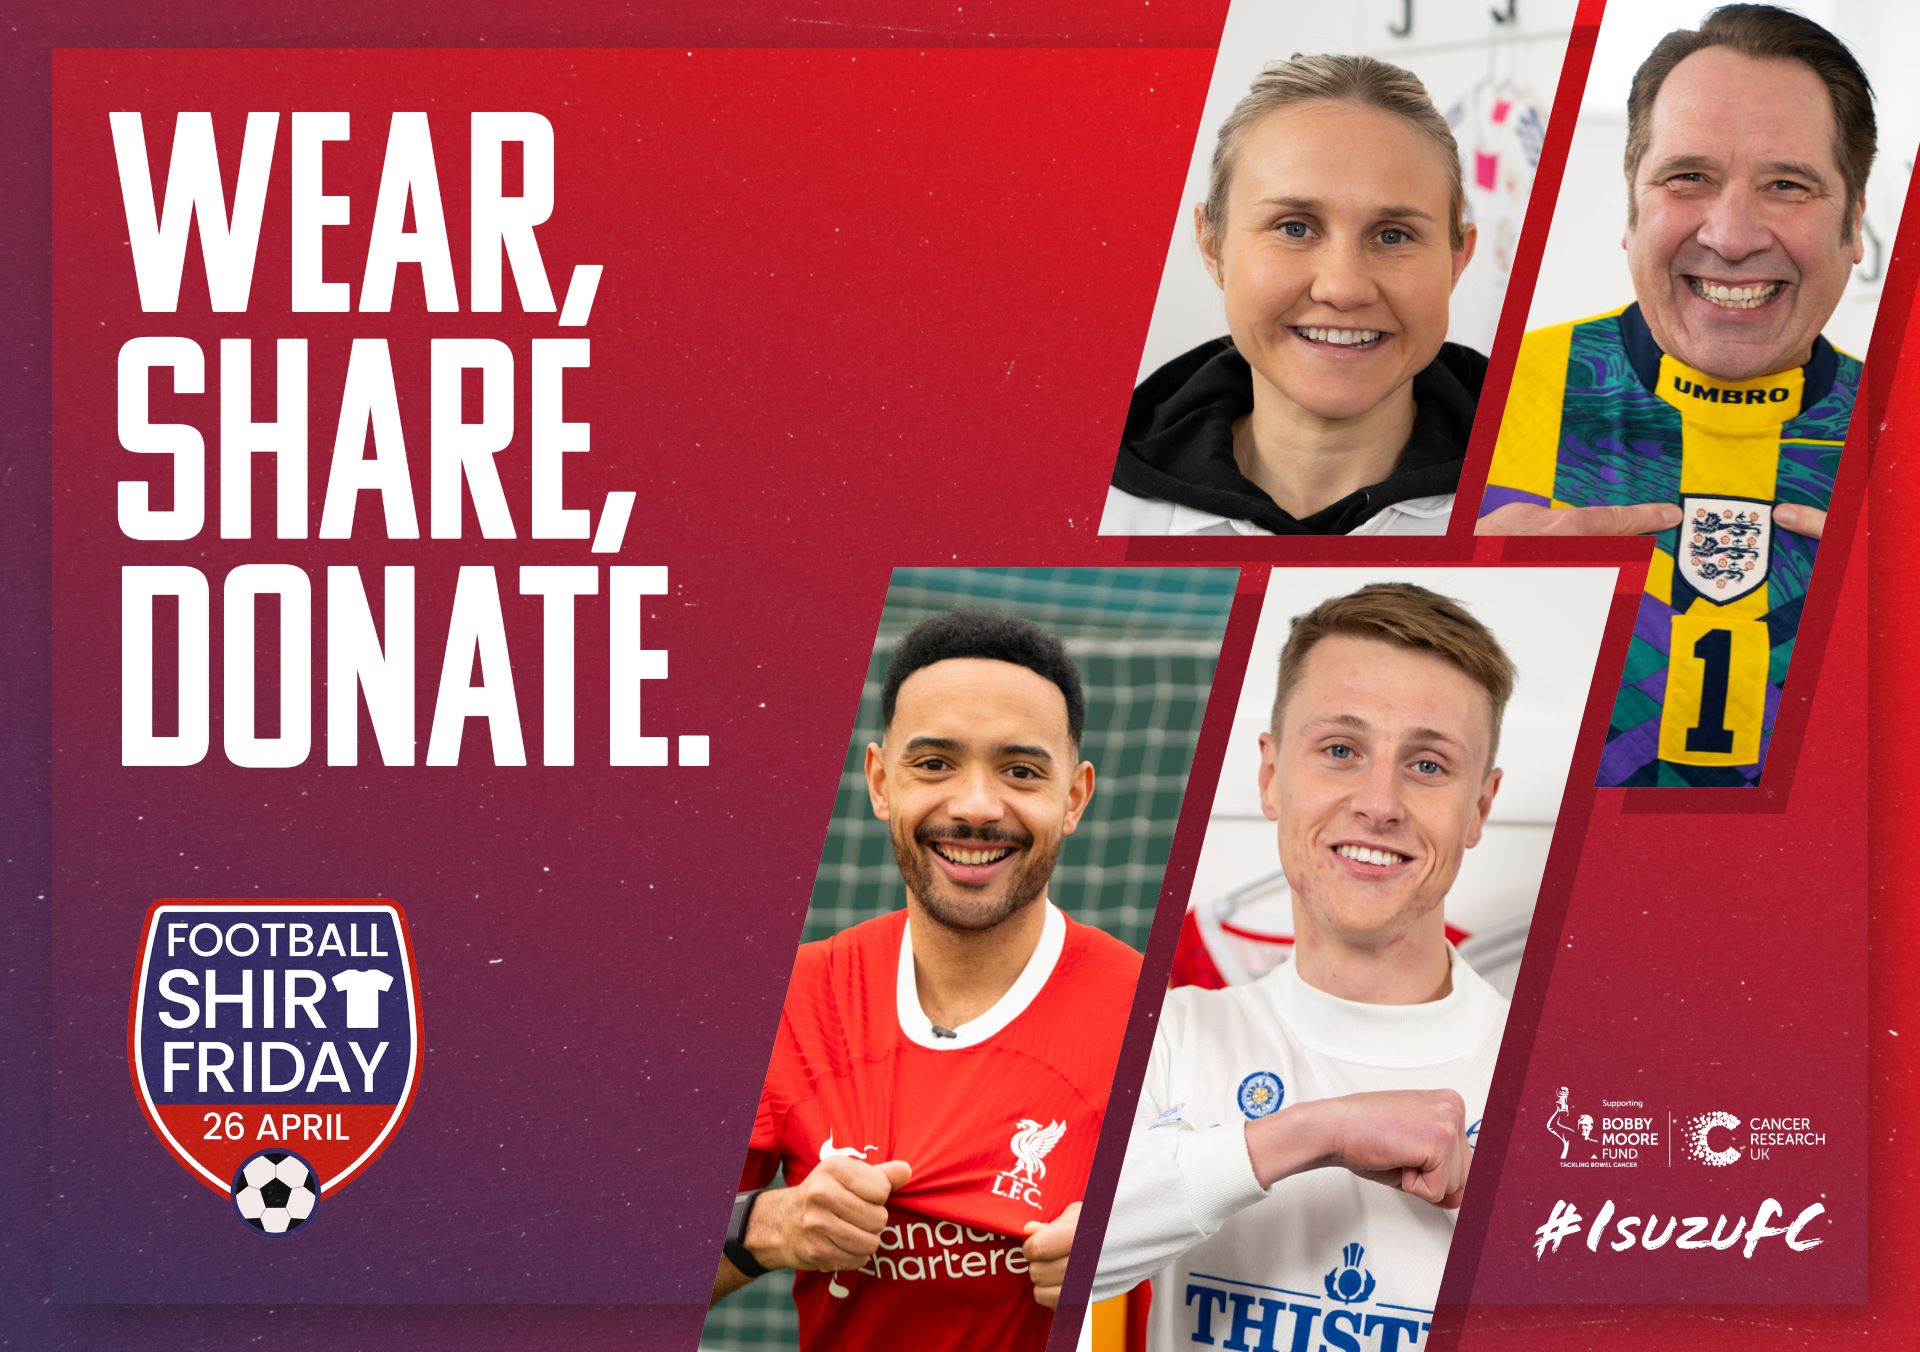 Isuzu UK and Football Icons Support Bowel Cancer Awareness on Football Shirt Friday